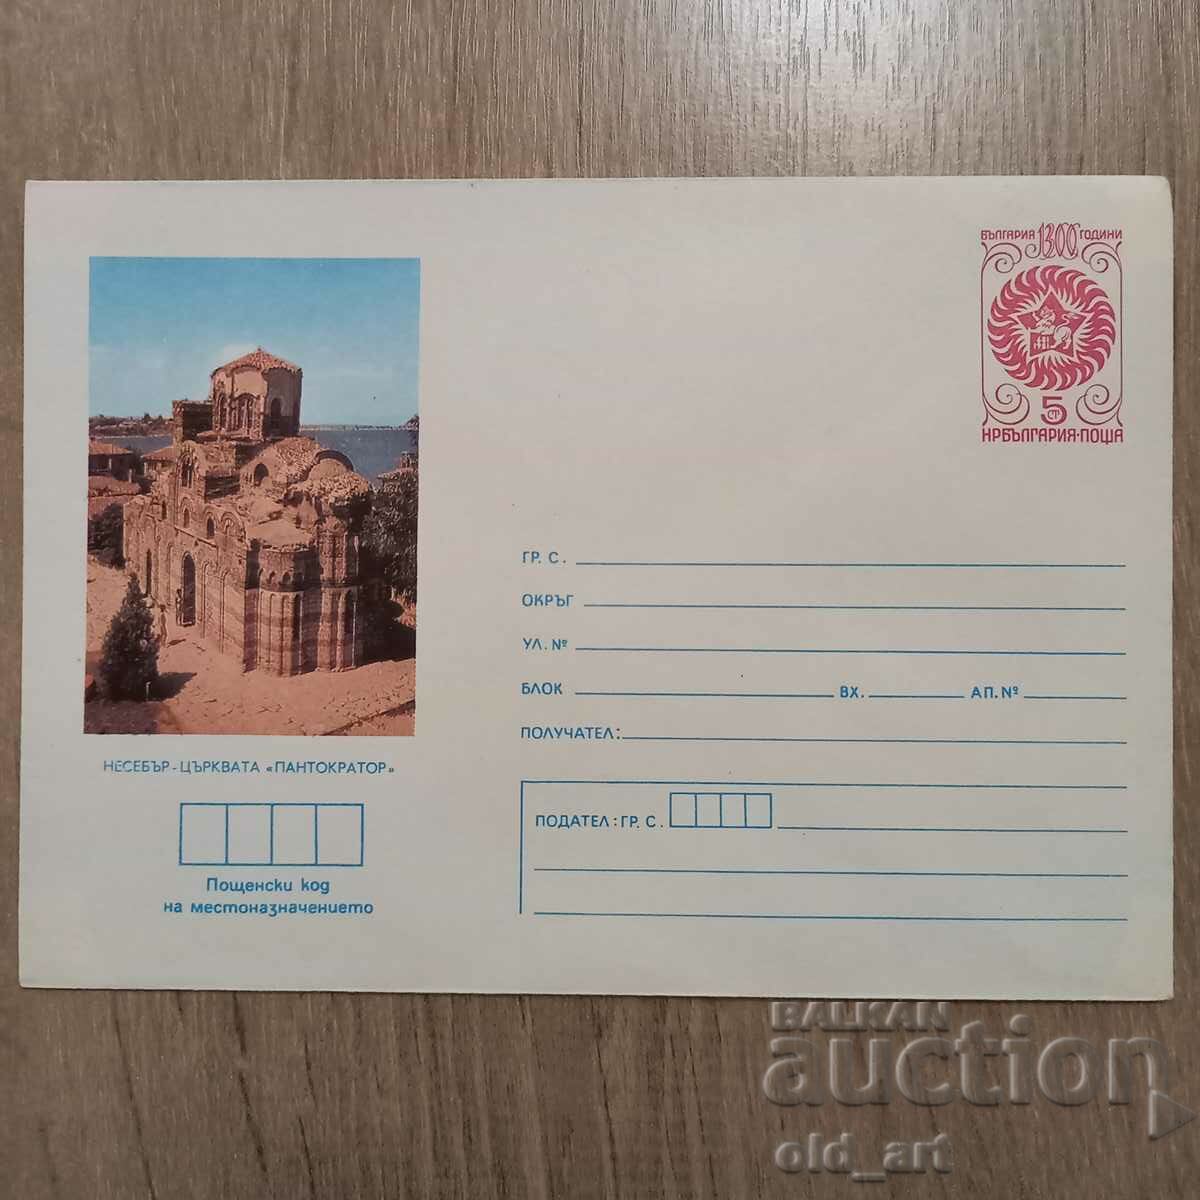 Postal envelope - Nessebar, the church of Pantokrator